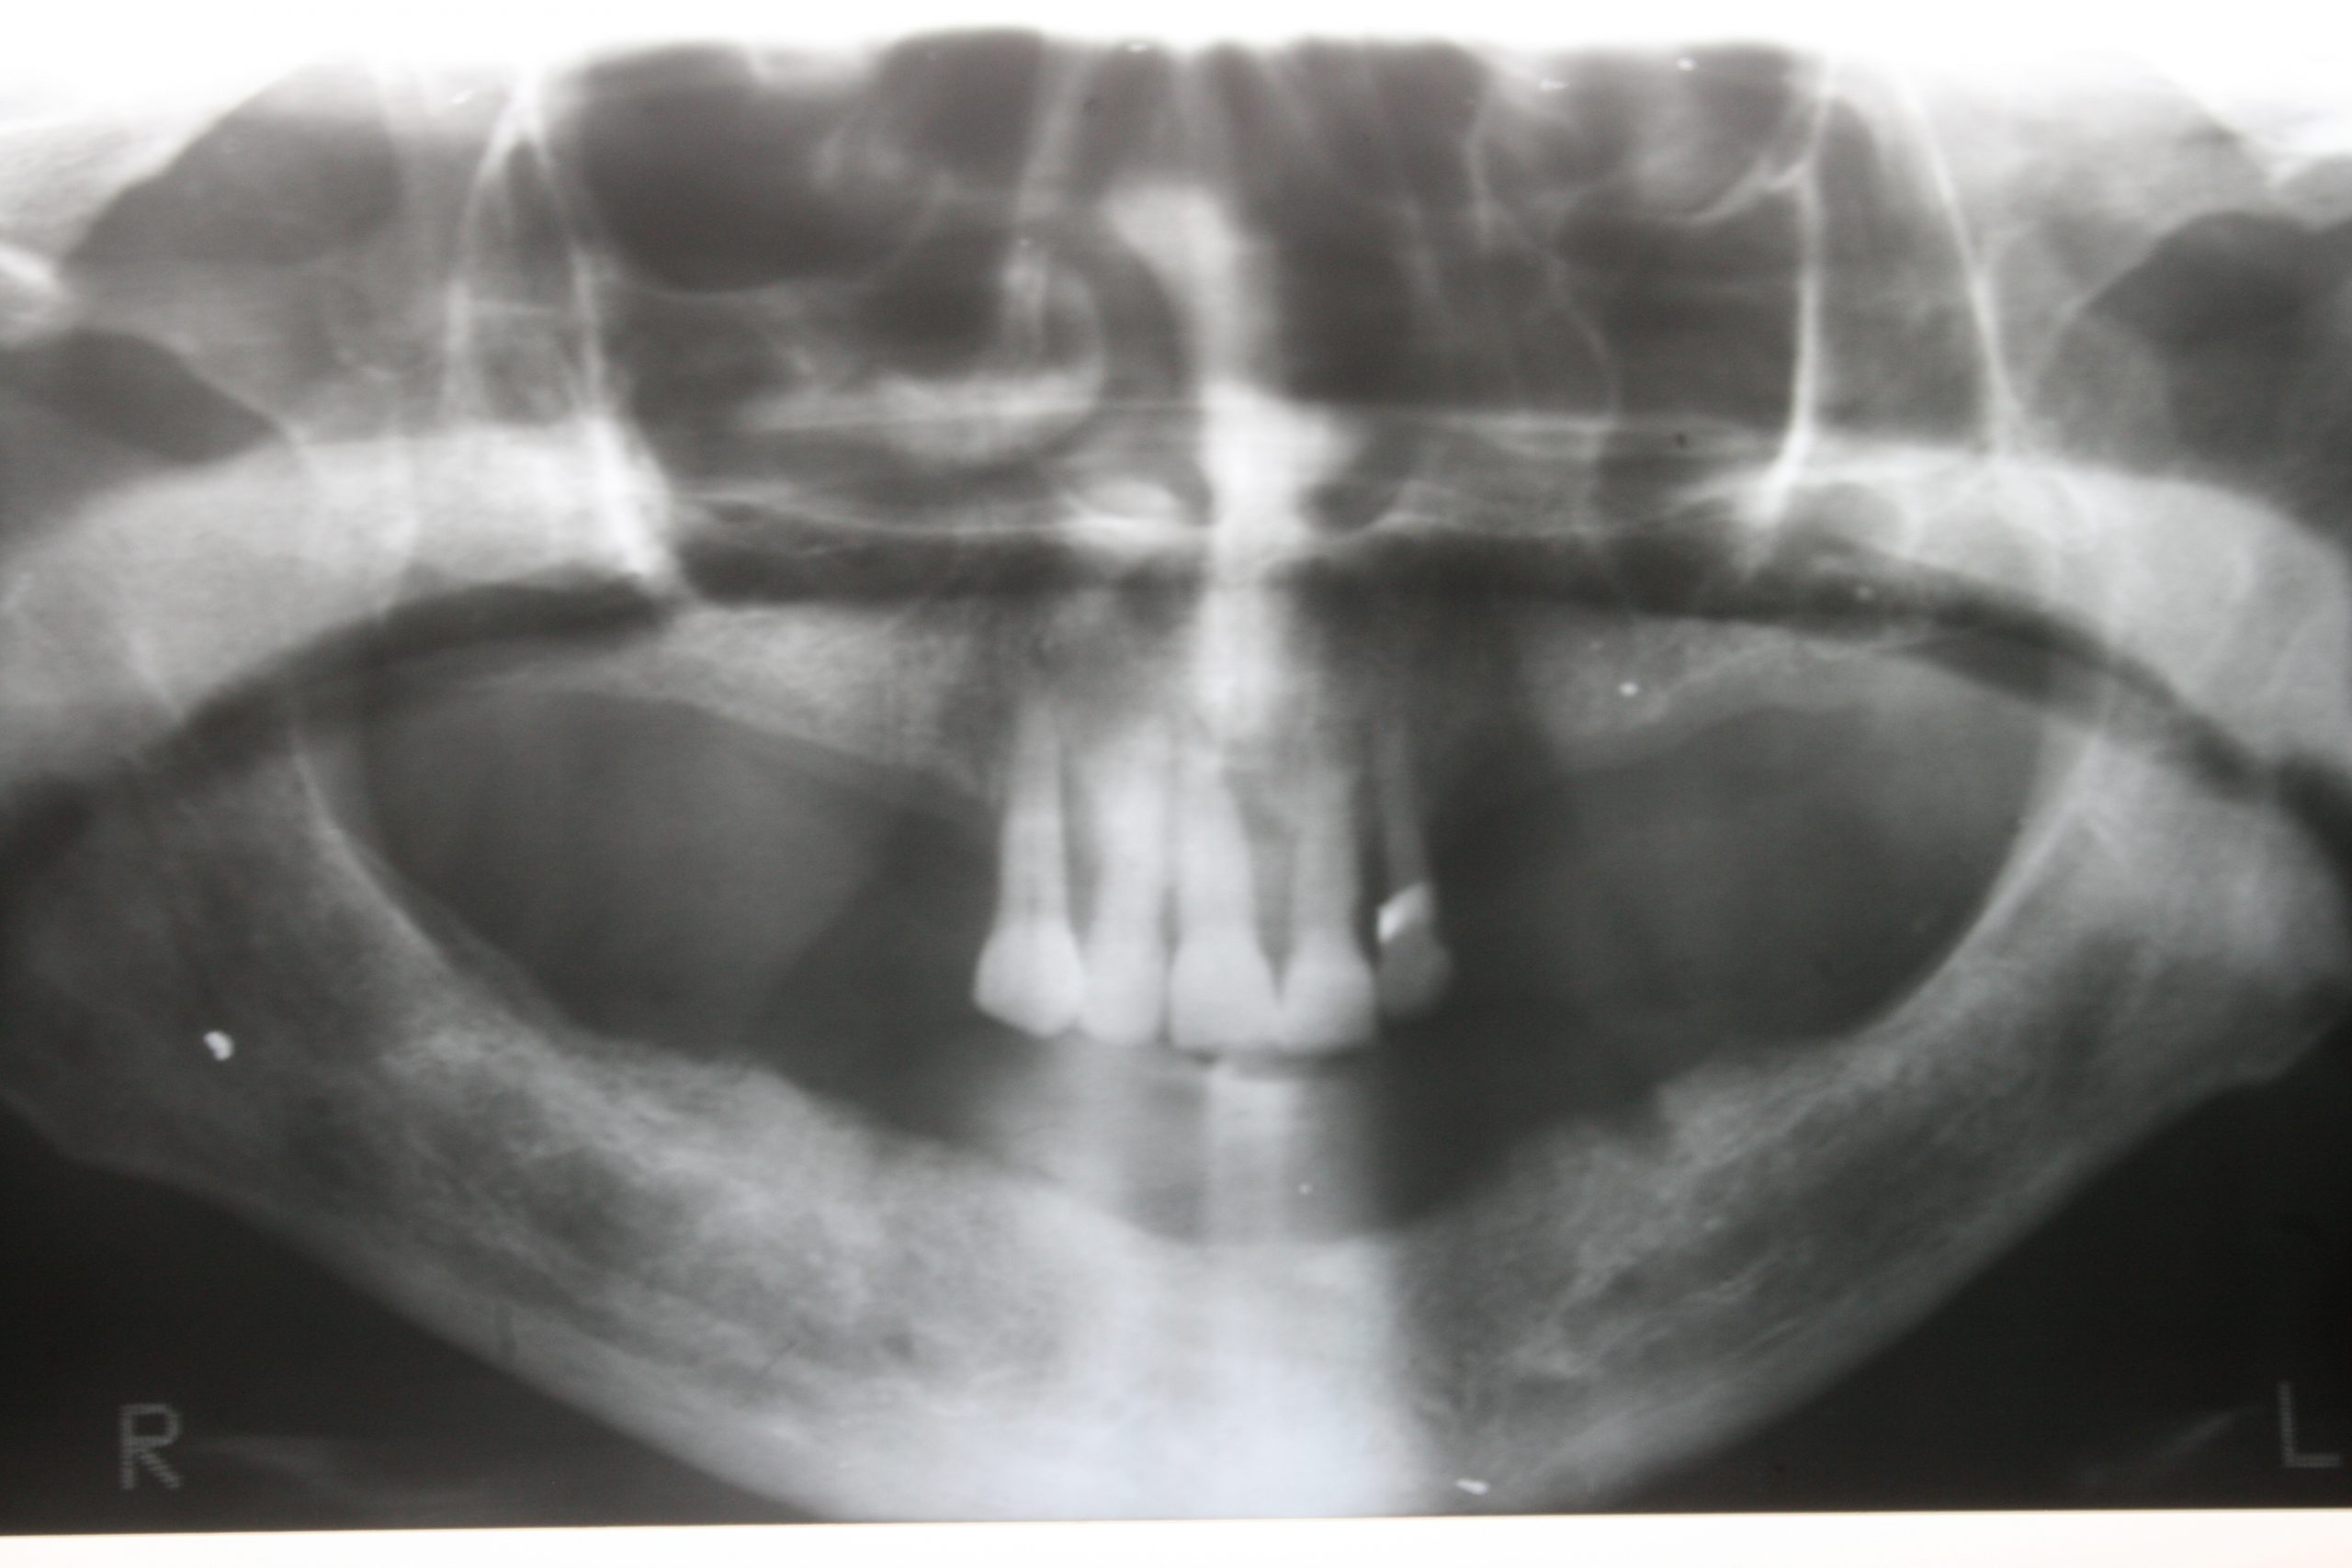 DC-Inferior-1-Ortopantomografia